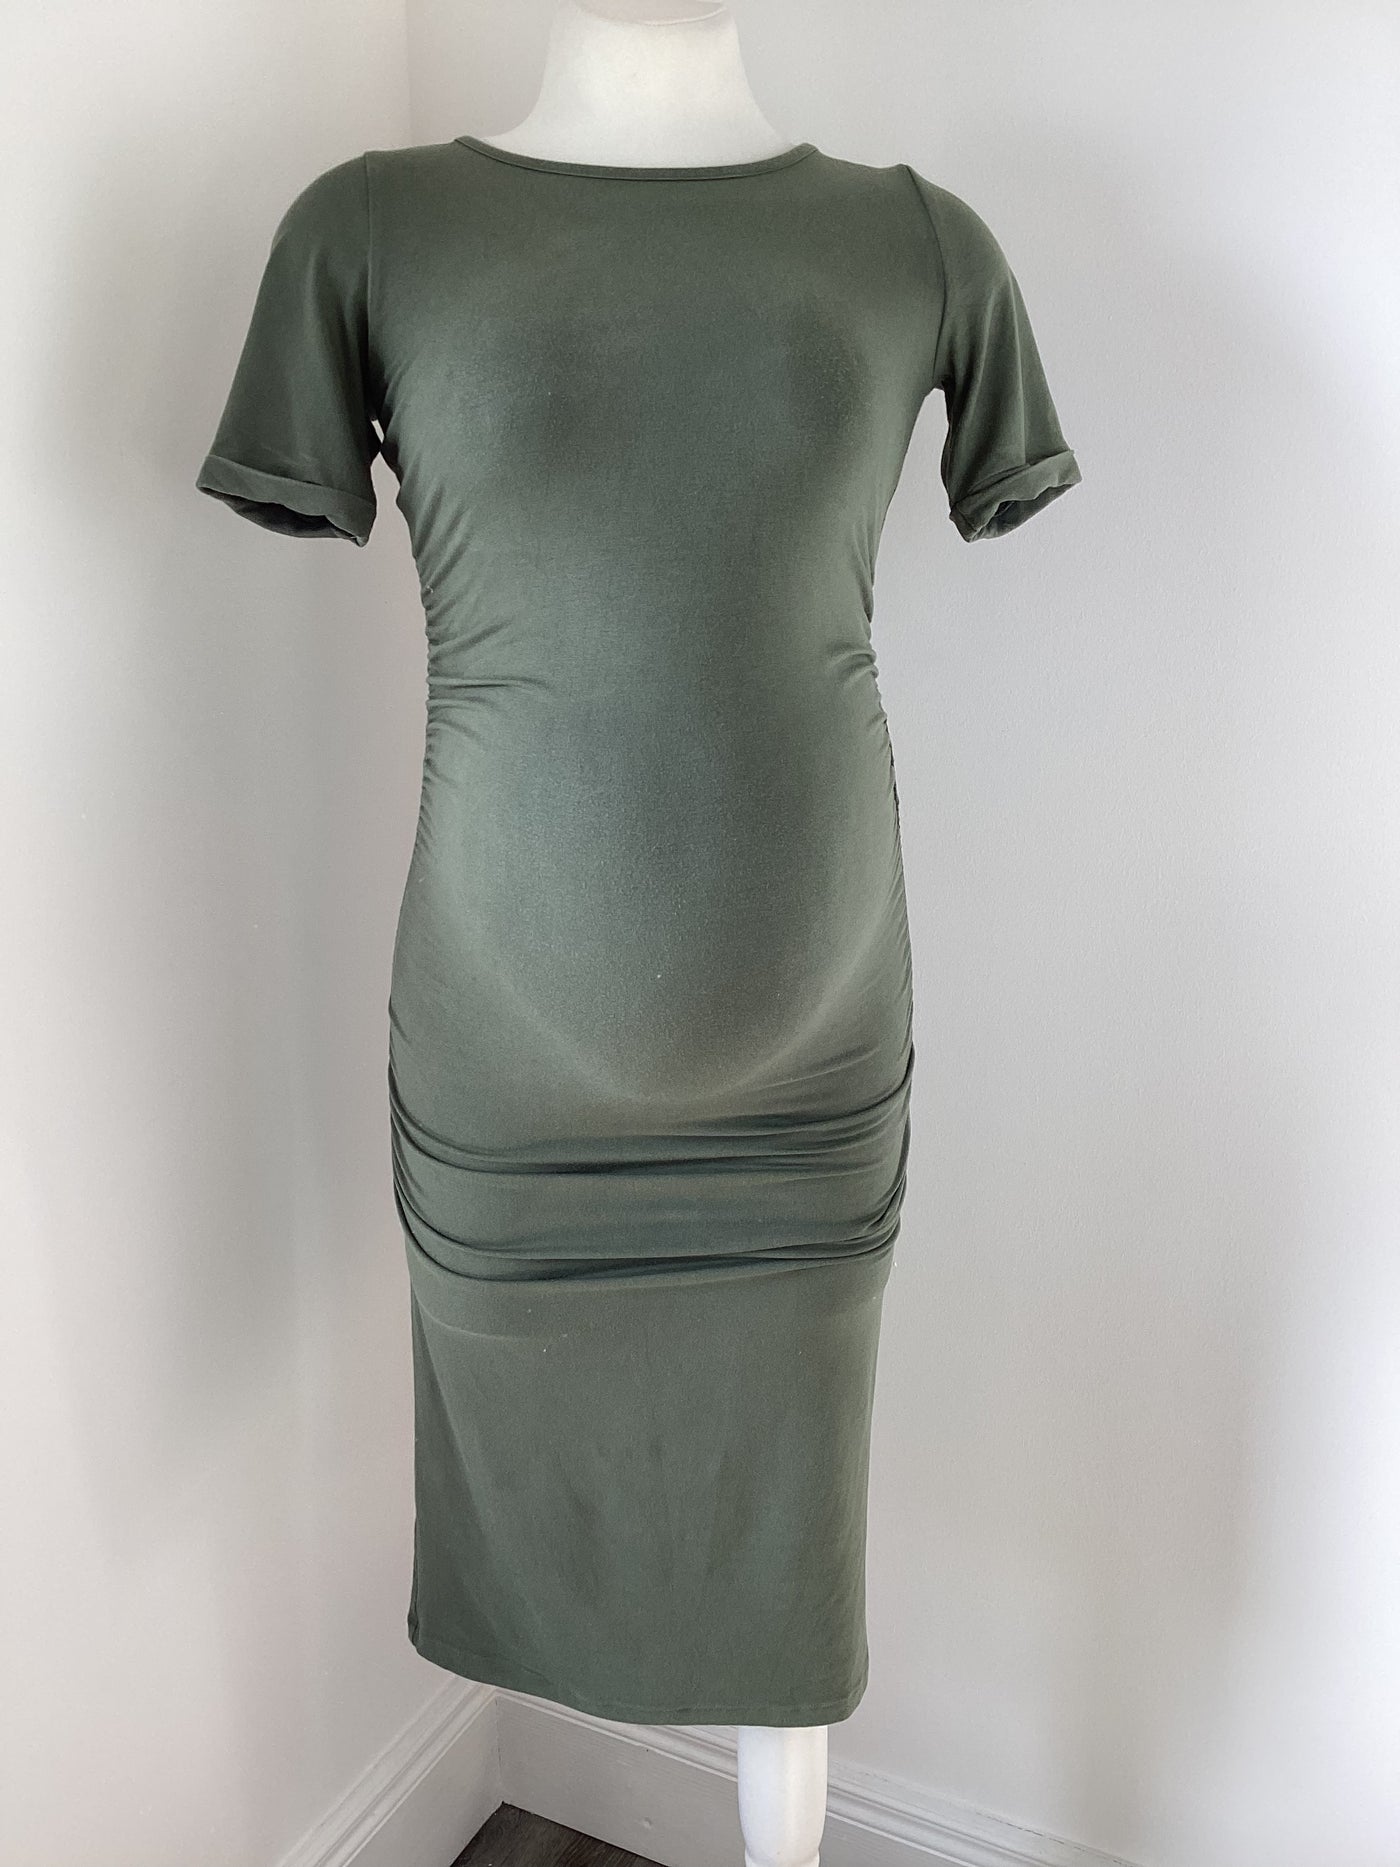 Isabella Oliver Khaki Short Sleeved Stretch Dress - Size 0 (Approx UK 6)